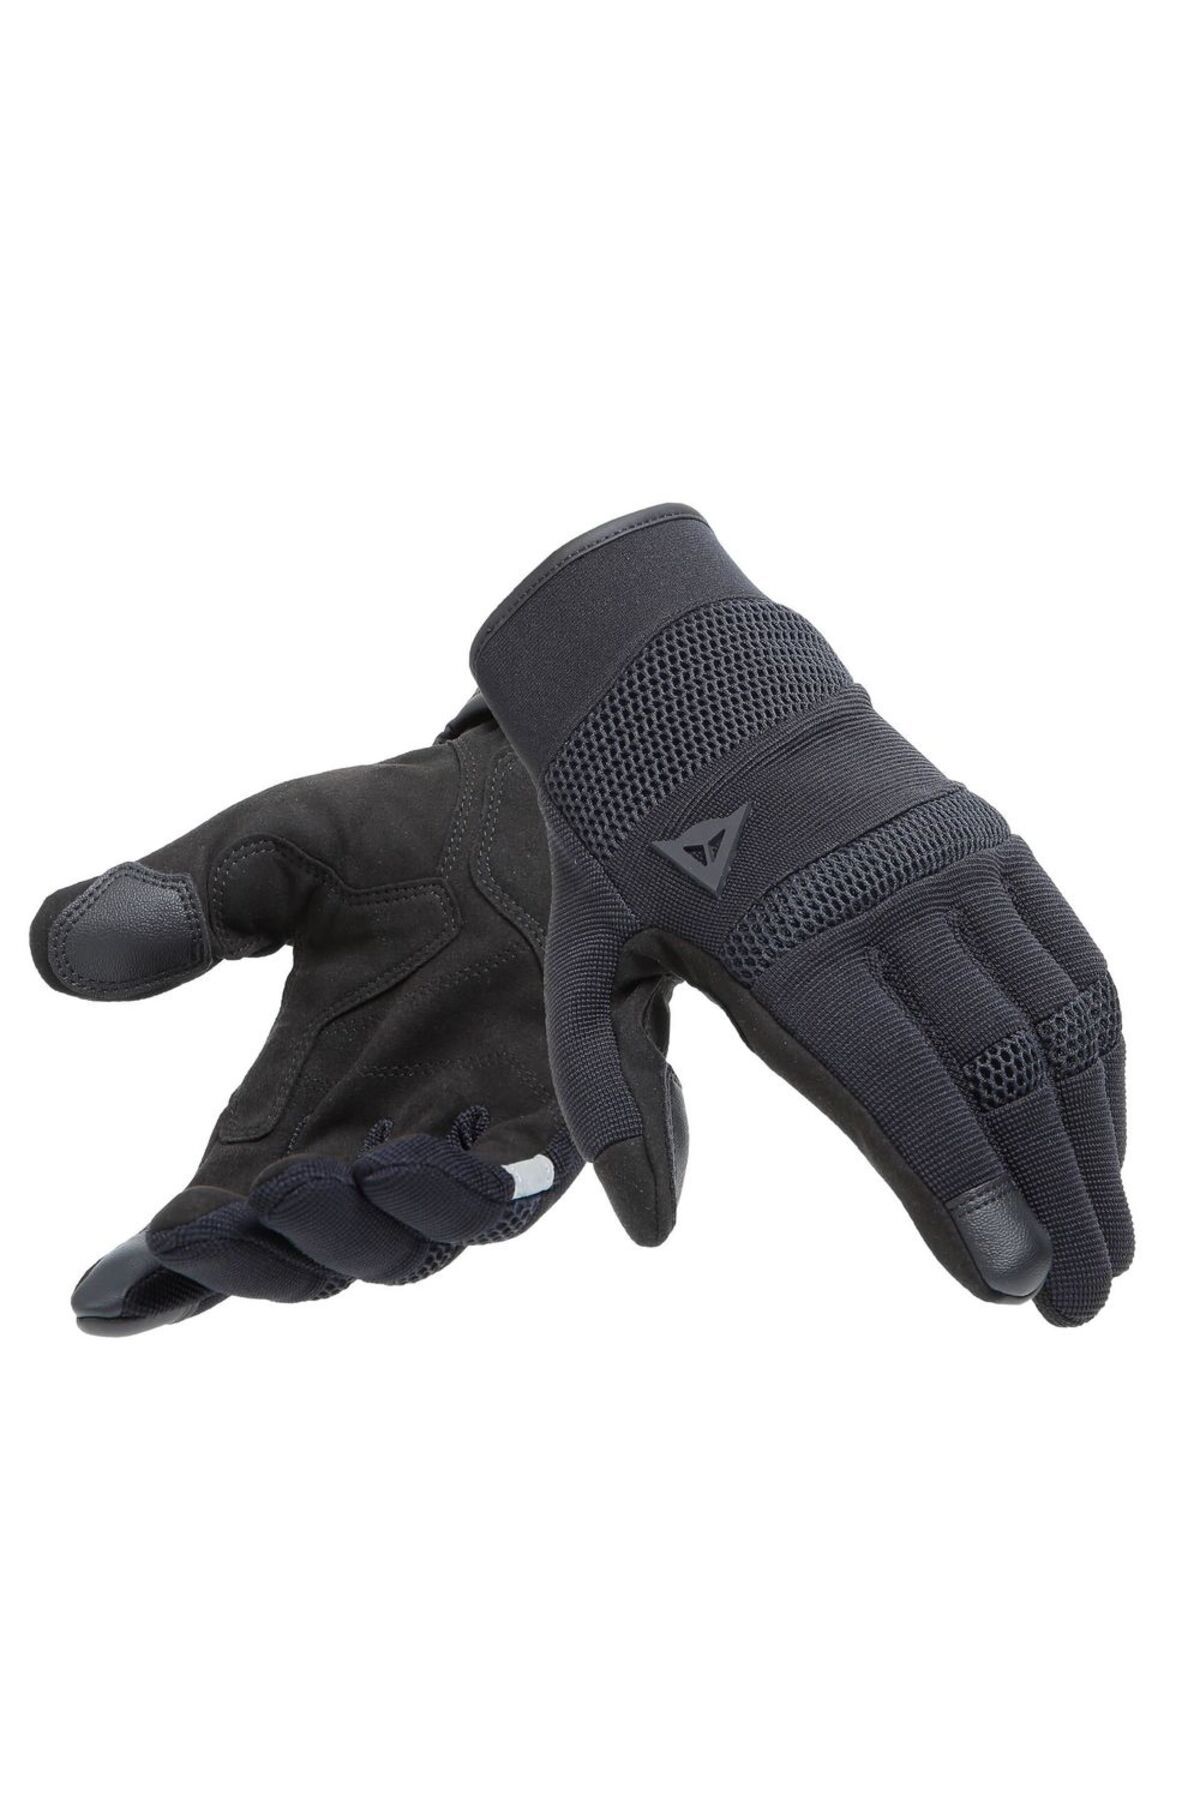 Dainese Eld/athene Tex Gloves Black Black